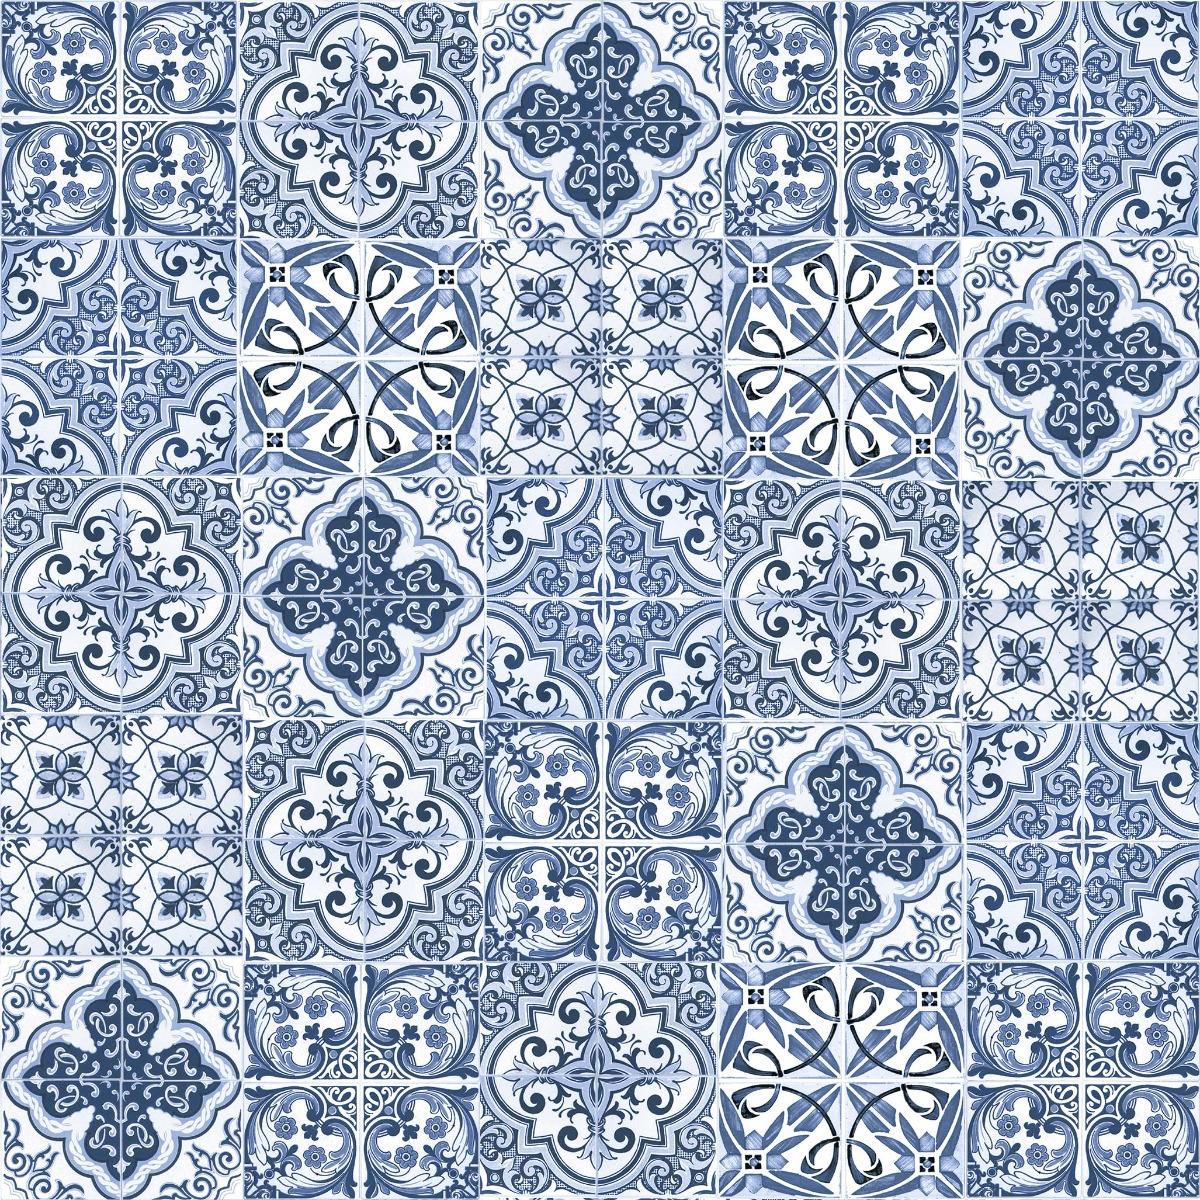 Blue Tiles for Bathroom Tiles, Living Room Tiles, Bedroom Tiles, Accent Tiles, Hospital Tiles, High Traffic Tiles, Bar/Restaurant, Commercial/Office, Outdoor Area, School & Collages